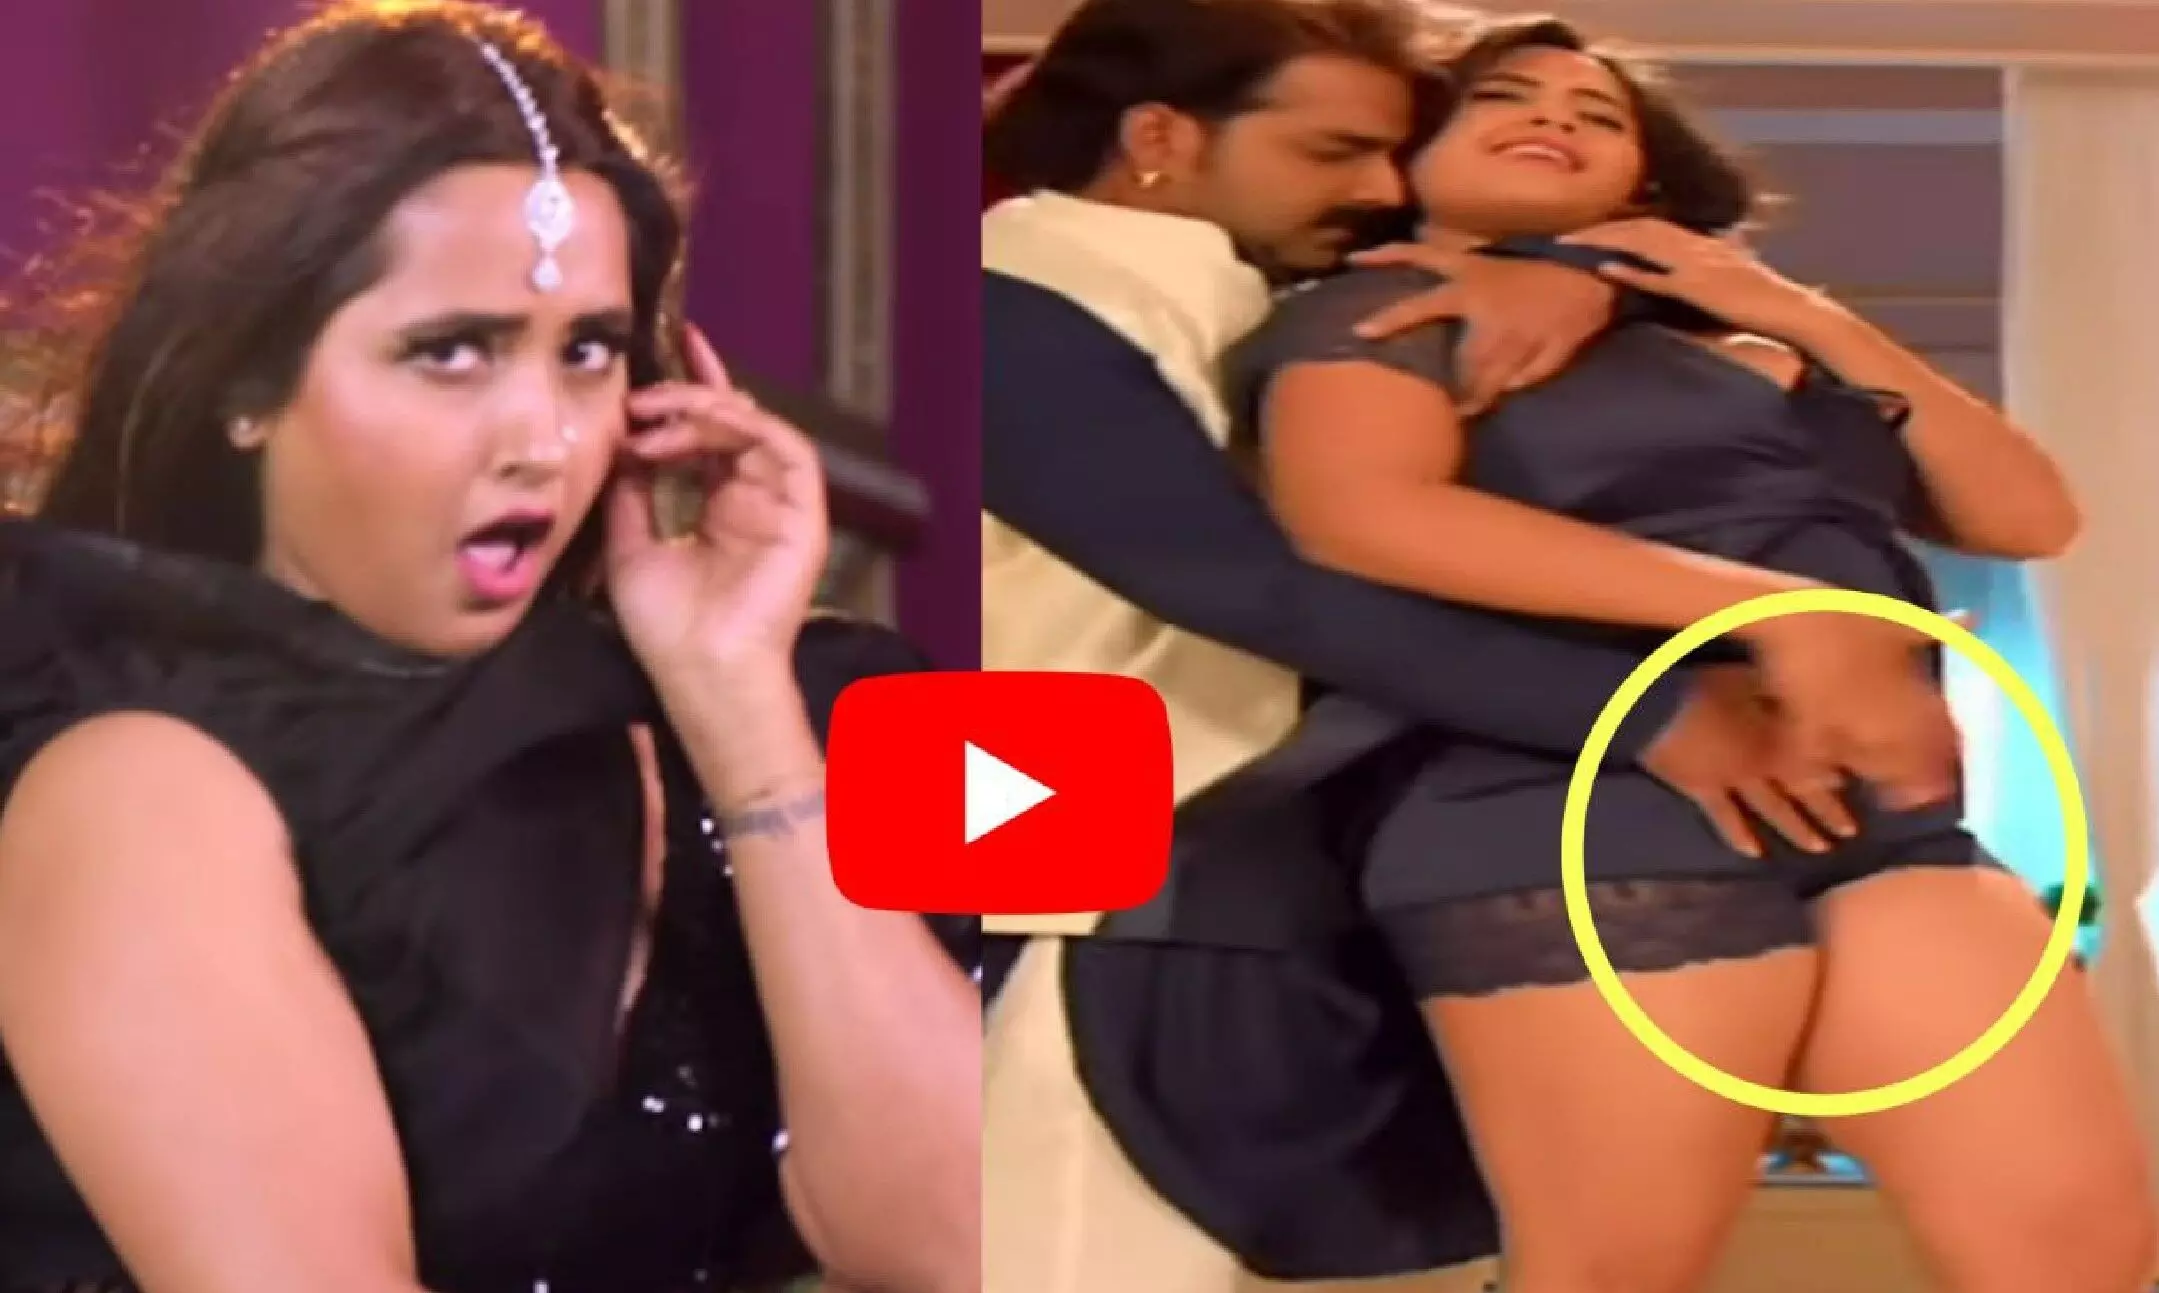 Kajal Raghwani Ka Sex - Kajal Raghwani HOT Video: à¤•à¤¾à¤œà¤² à¤°à¤¾à¤˜à¤µà¤¾à¤¨à¥€ à¤•à¤¾ à¤¹à¥‰à¤Ÿ à¤µà¥€à¤¡à¤¿à¤¯à¥‹ à¤¦à¥‡à¤– à¤¦à¥€à¤µà¤¾à¤¨à¥‡ à¤¹à¥‹ à¤—à¤ à¤«à¥ˆà¤¨à¥à¤¸  | Kajal Raghwani HOT Video: Fans went crazy after watching Kajal Raghwani's  hot video